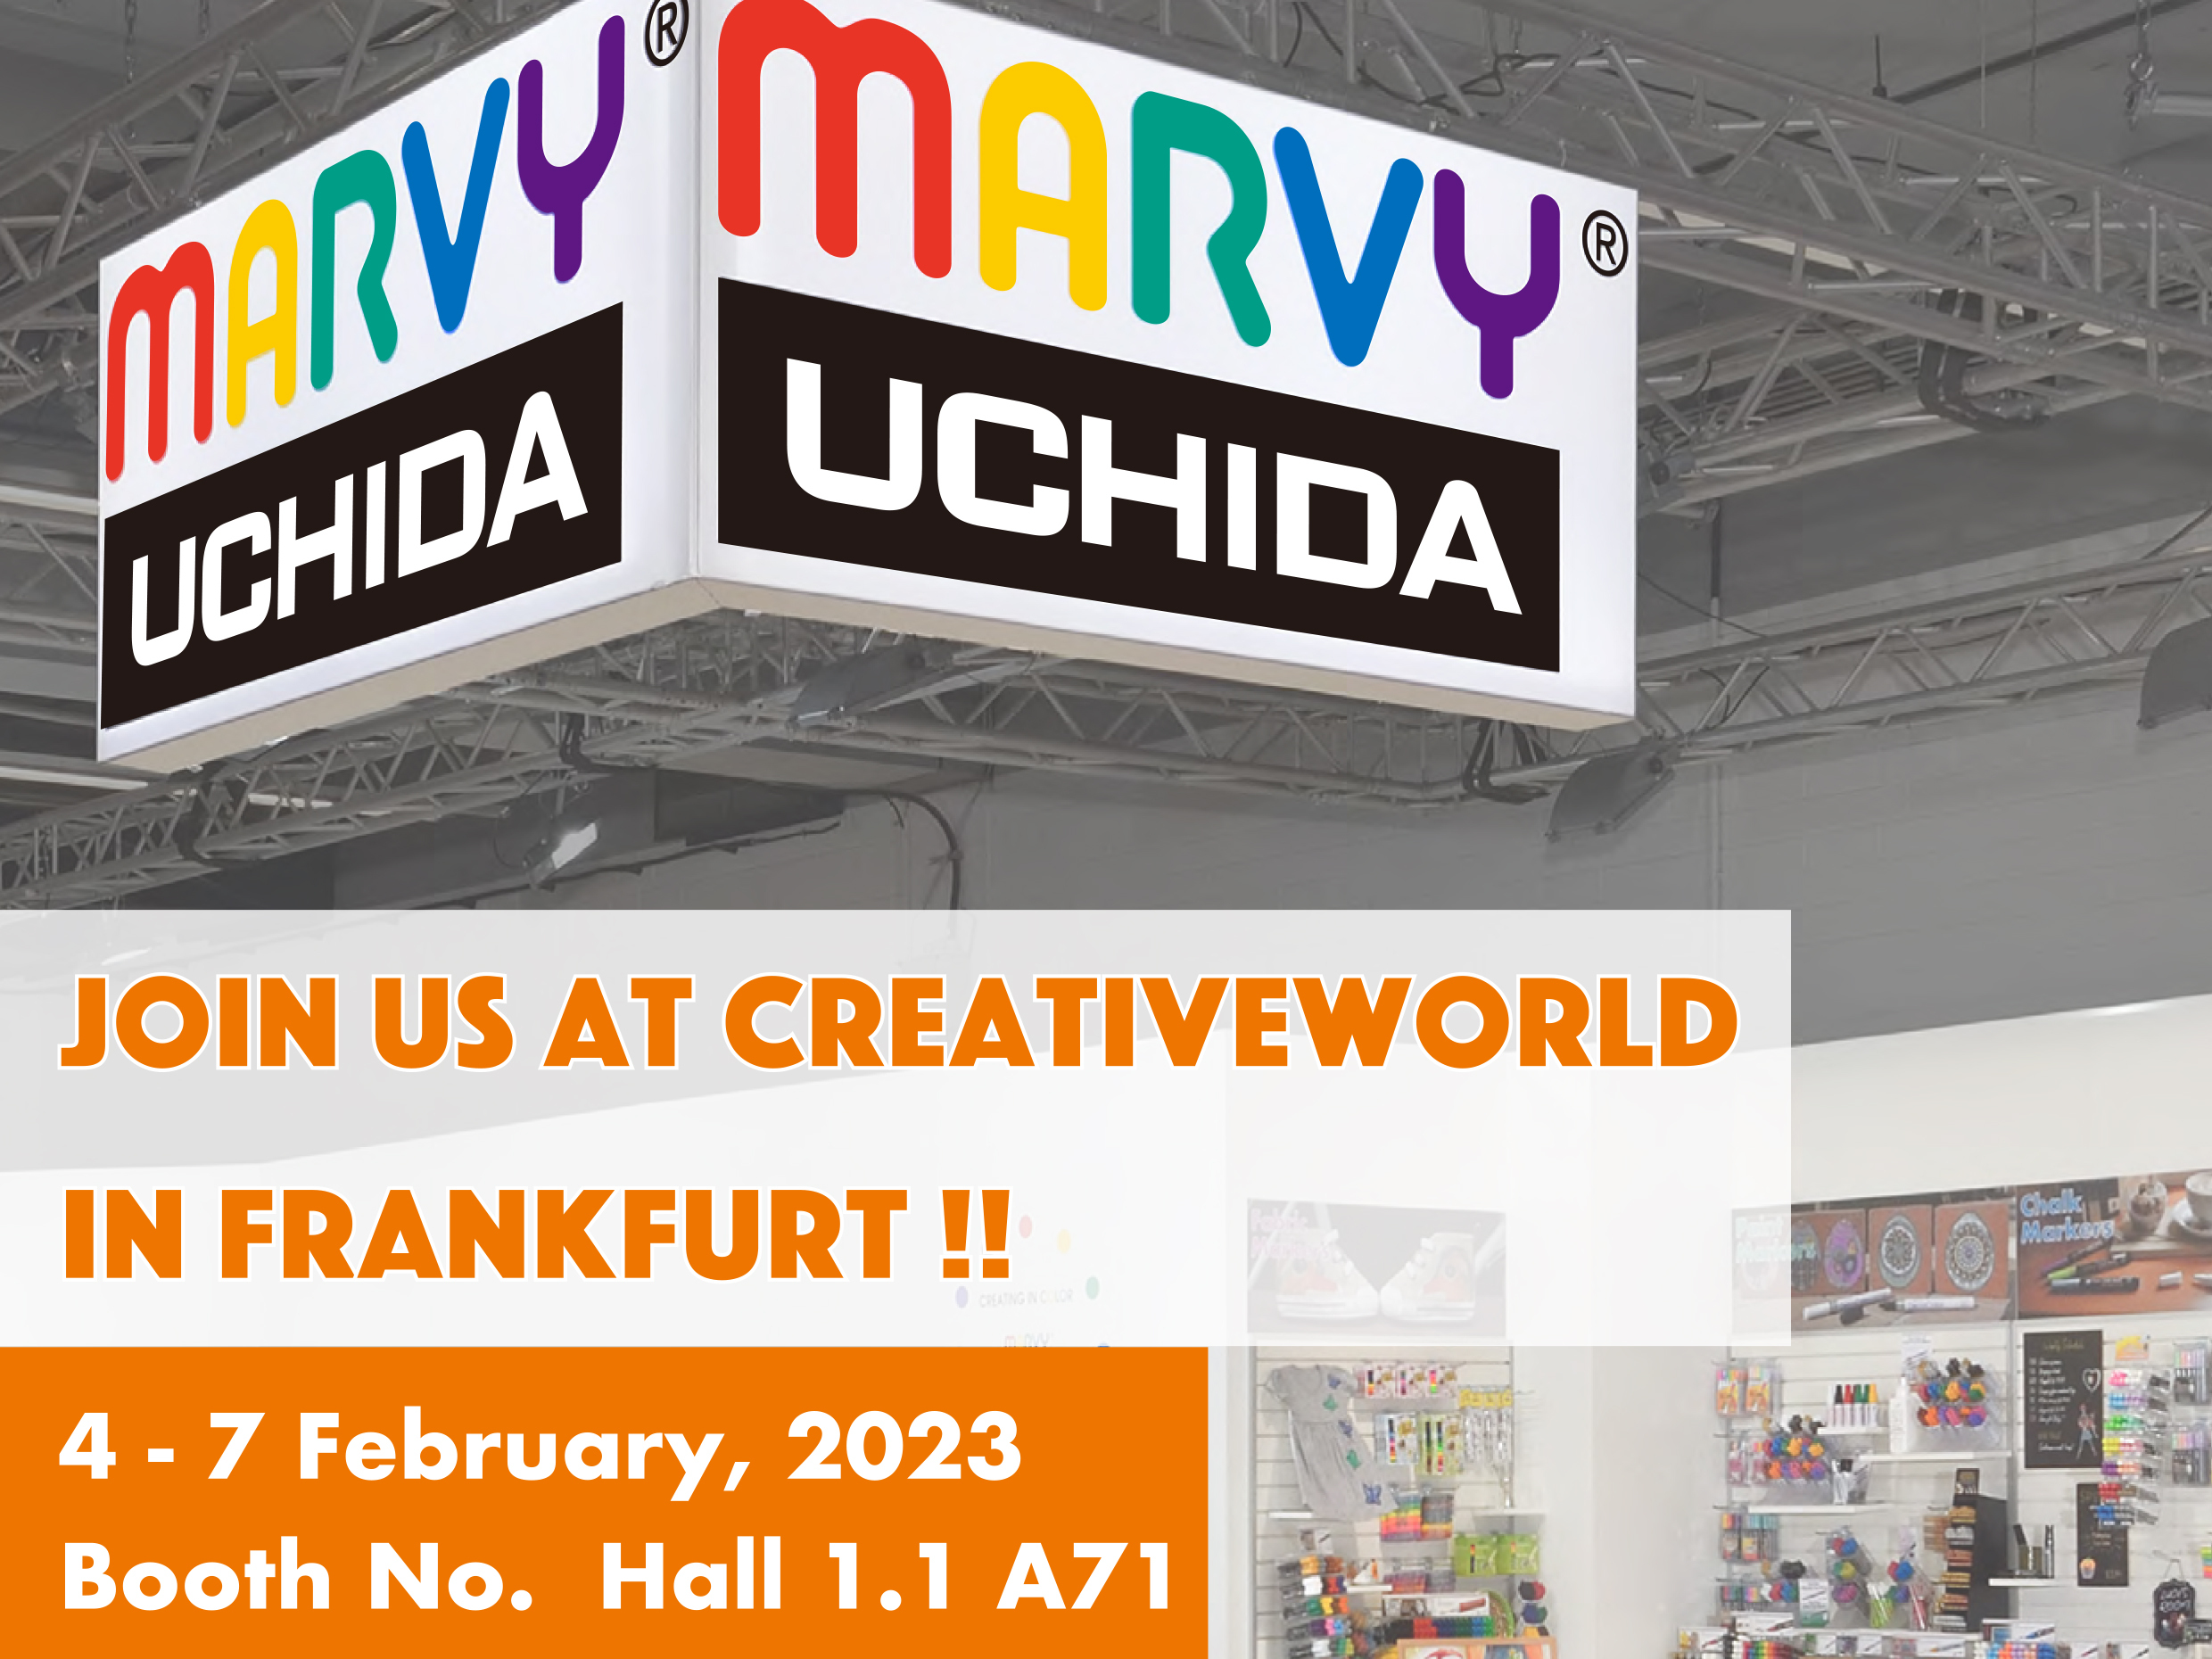 Exhibition of Creativeworld 2023 in Frankfurt, Germany